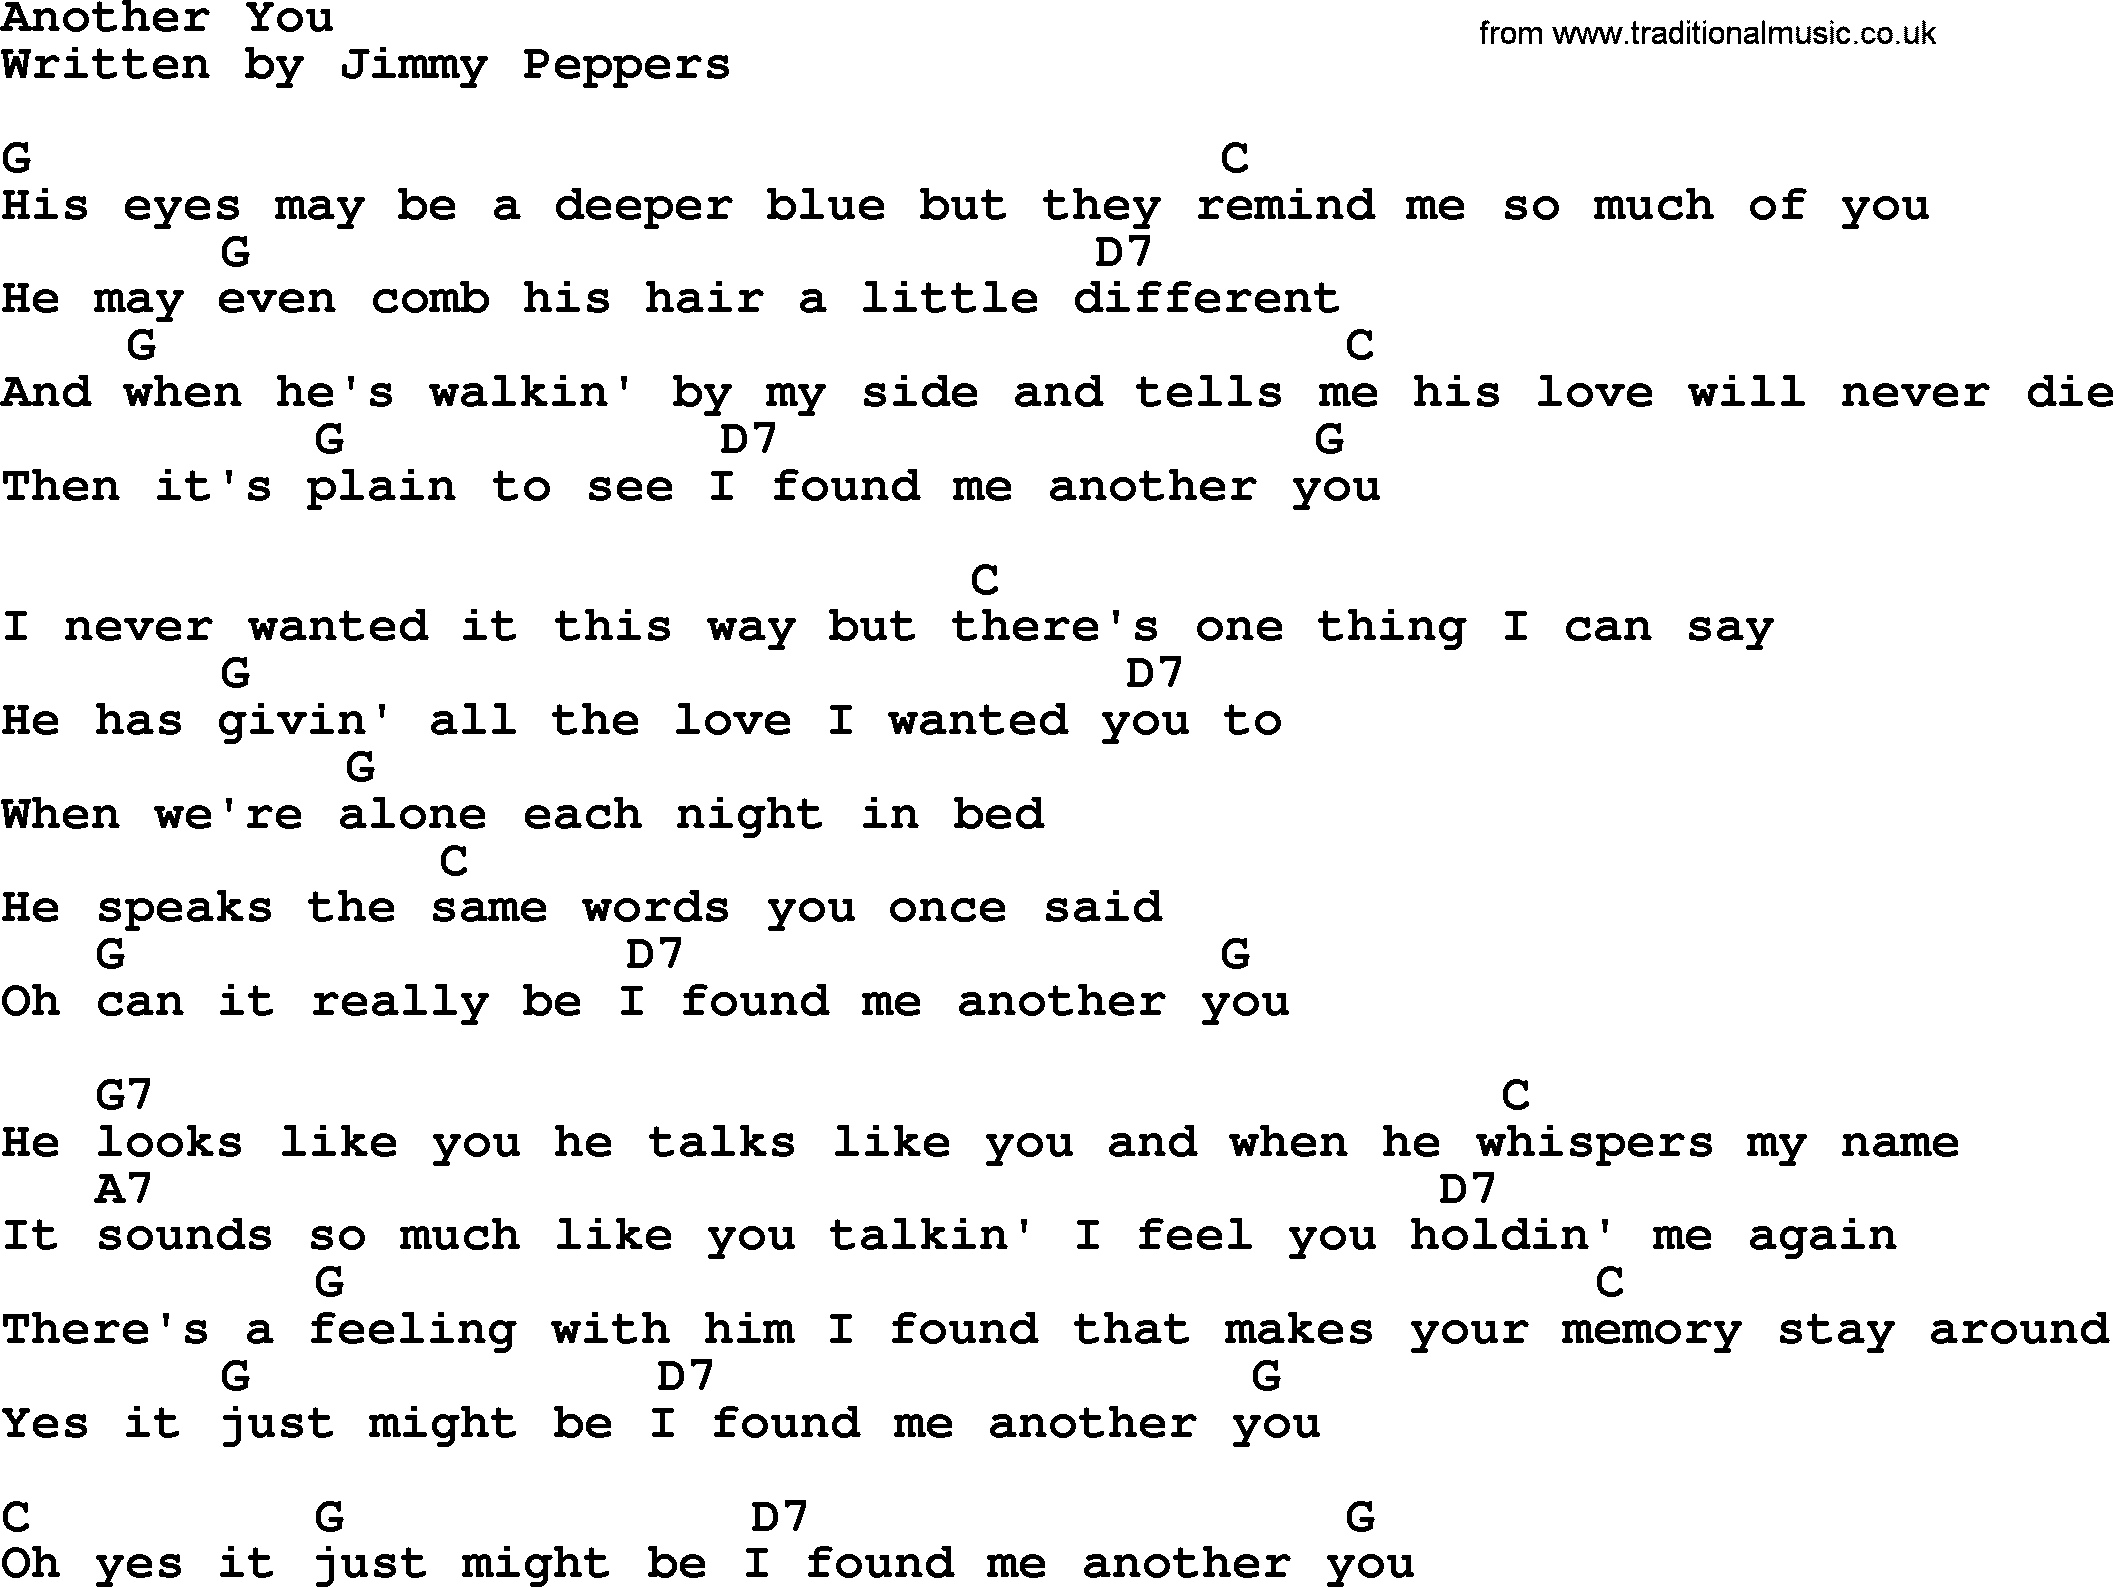 Loretta Lynn song: Another You lyrics and chords